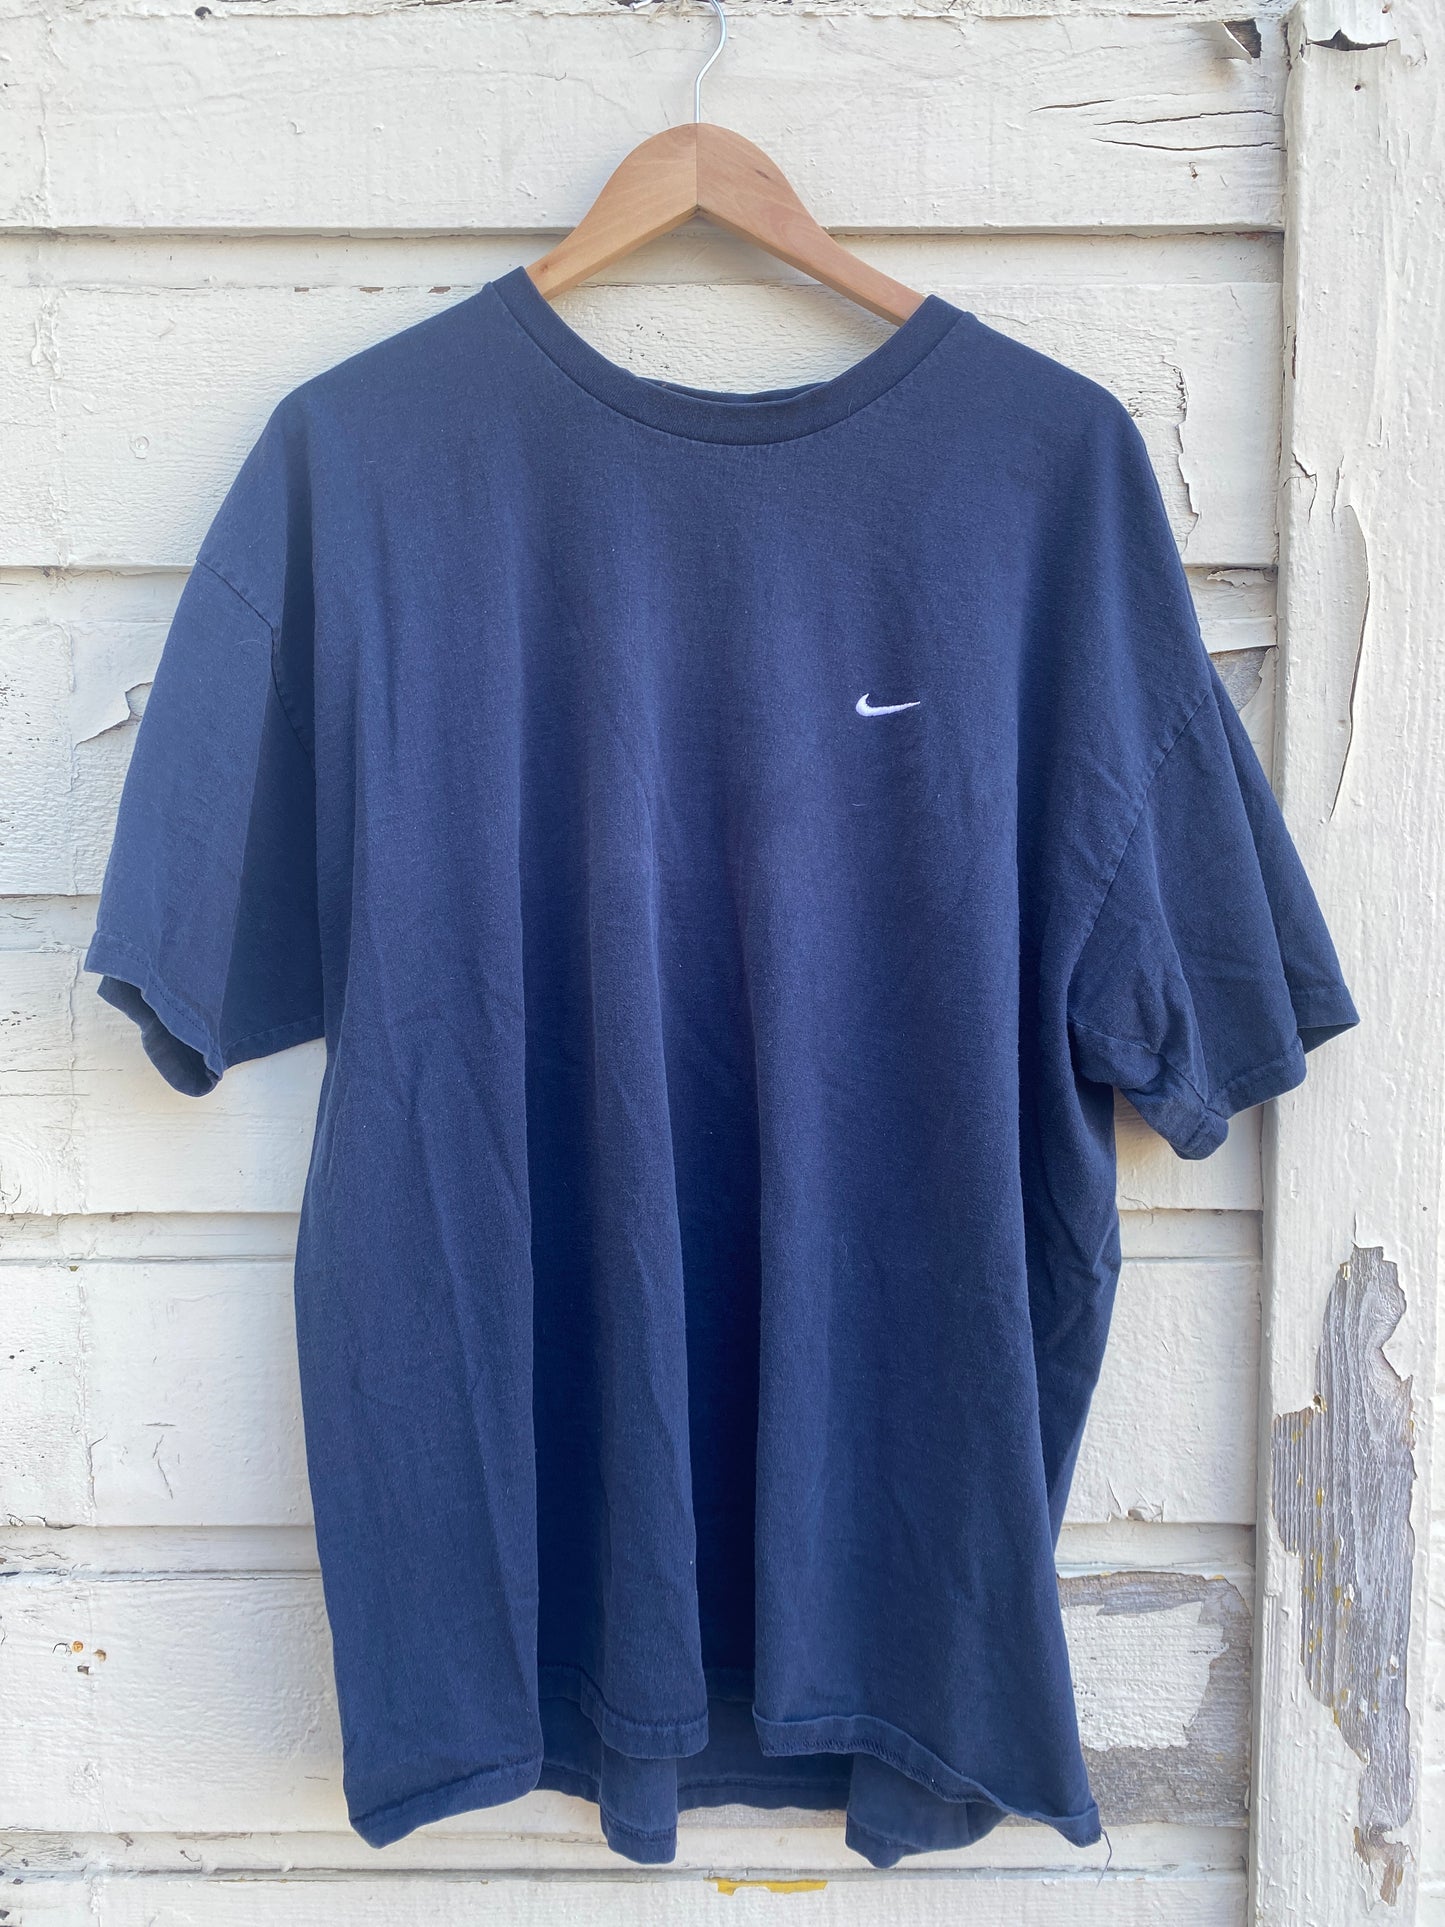 Vintage navy blue embroidered Nike mini swoosh XXL